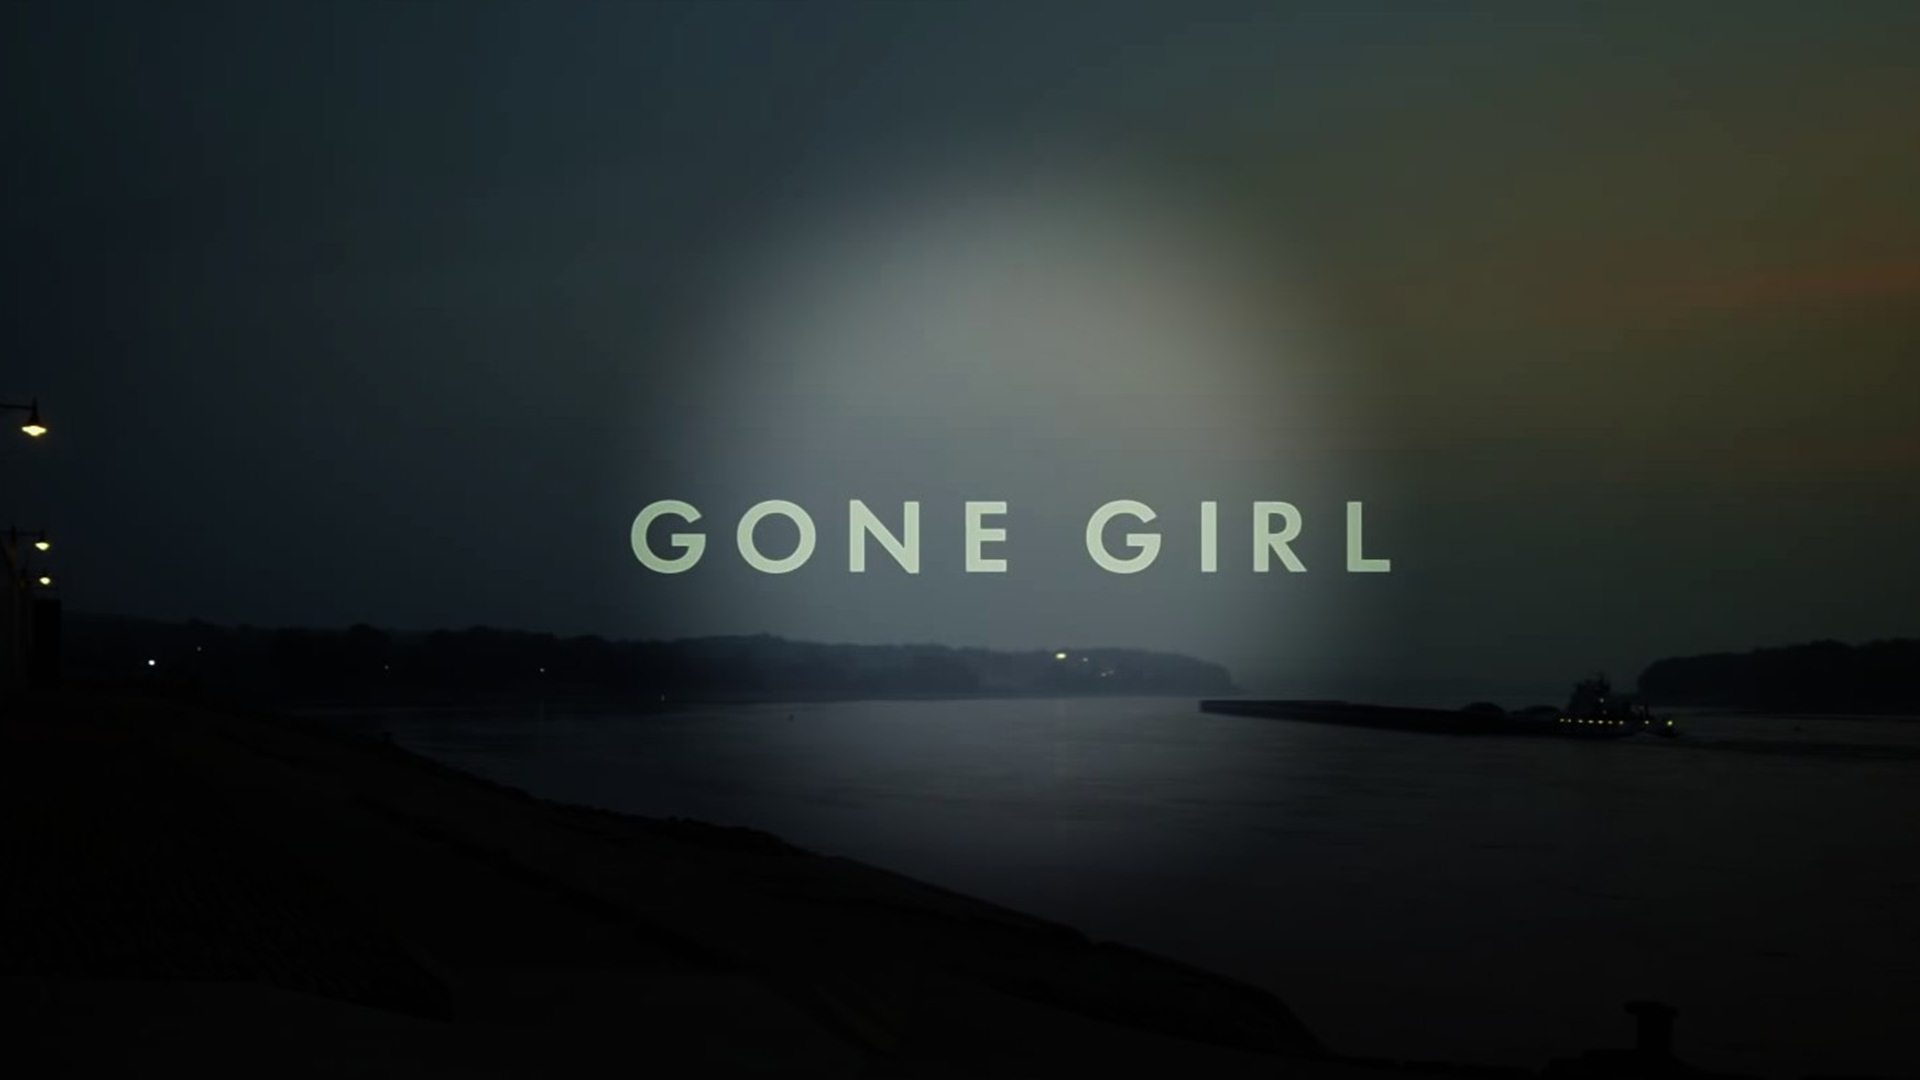 ashley brooke richardson recommends Download Gone Girl Movie